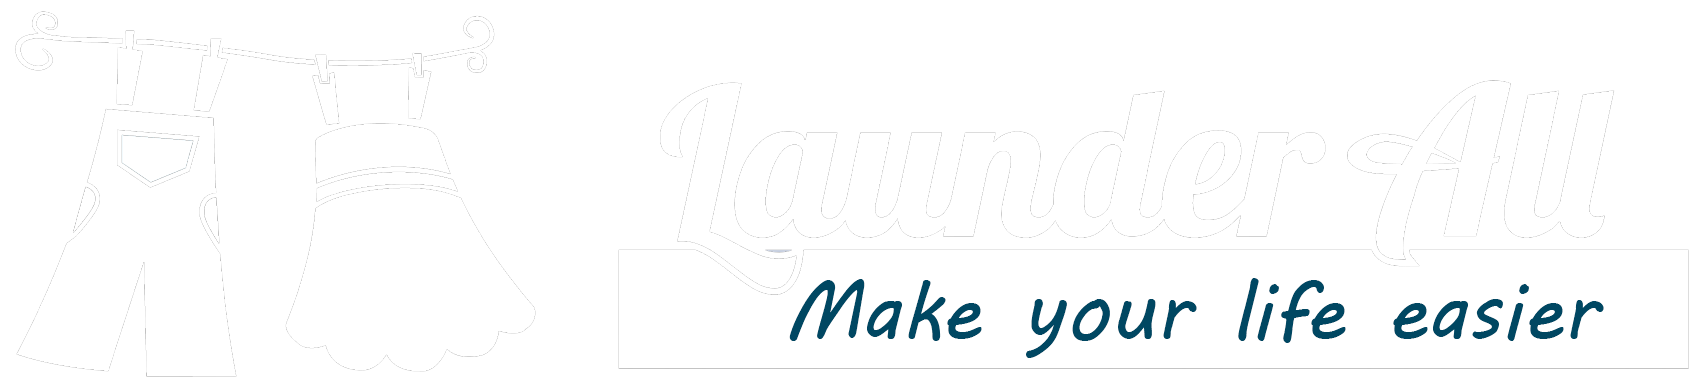 Launder All